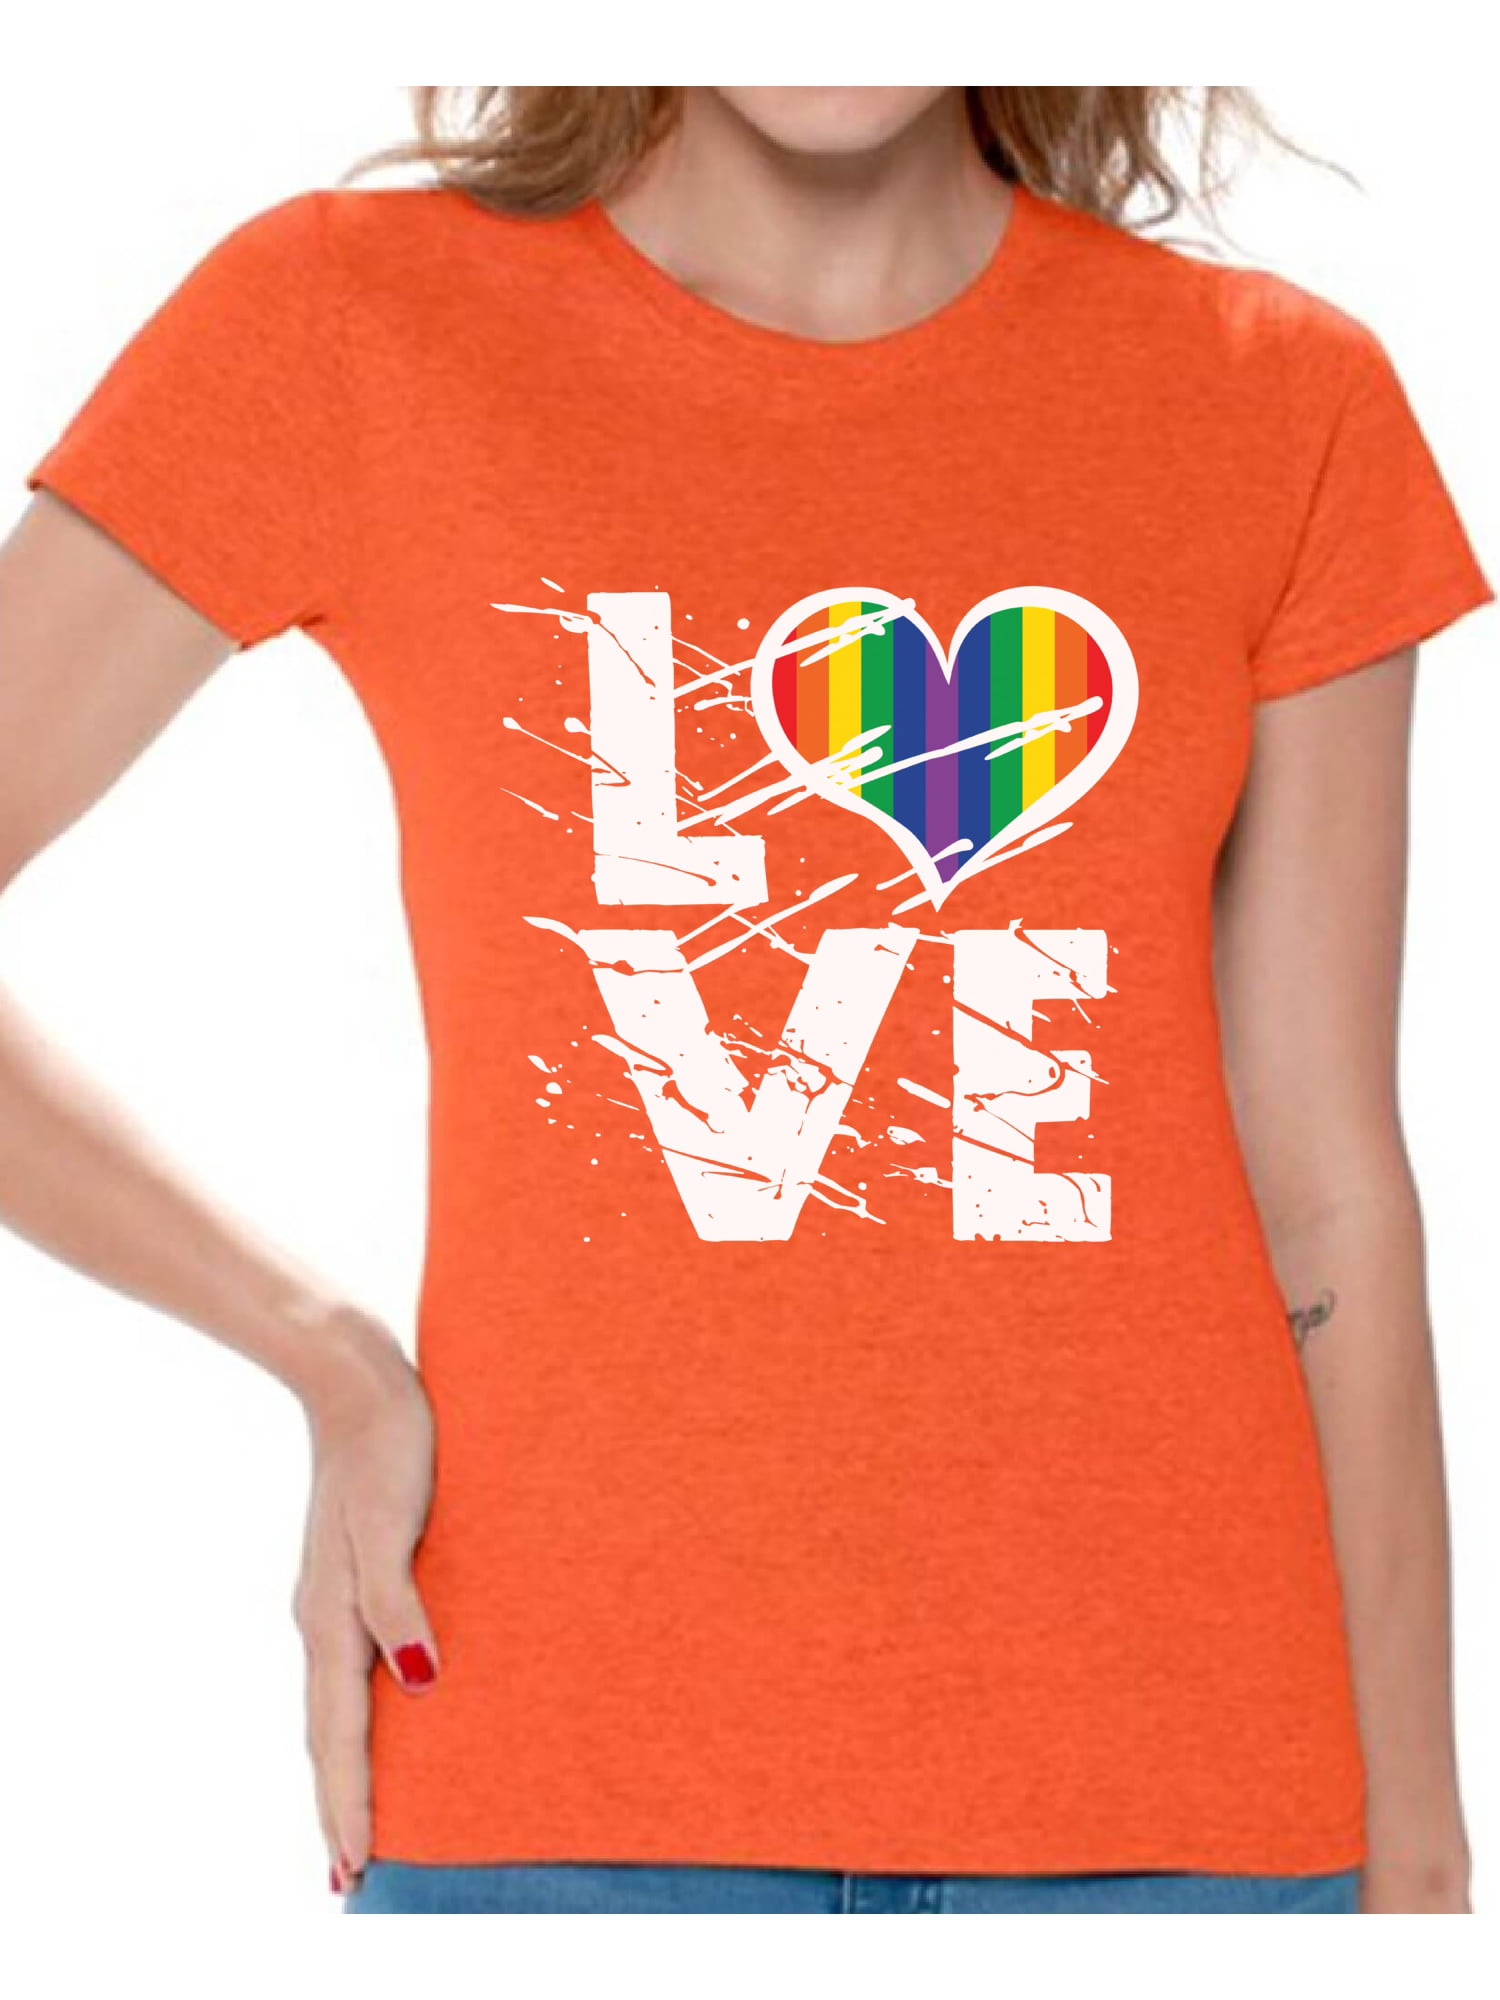 Love Equality Gay Pride Womens Lesbian Couple Gift Lesbian Shirt Rainbow heart Womens Sign Vneck Option LGBT Heart Love Shirt